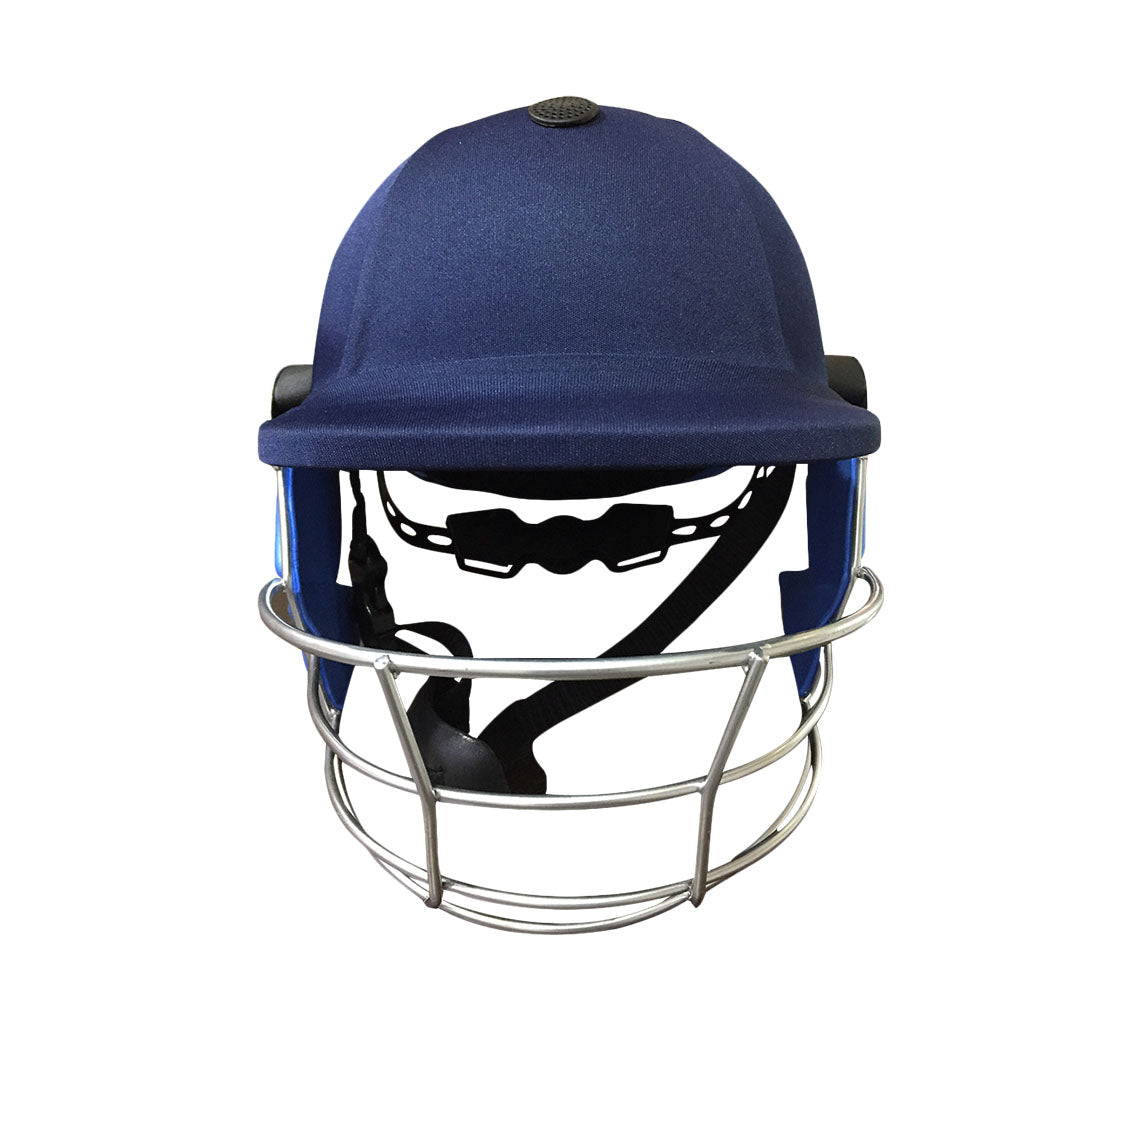 GA Middle Order Cricket Helmet